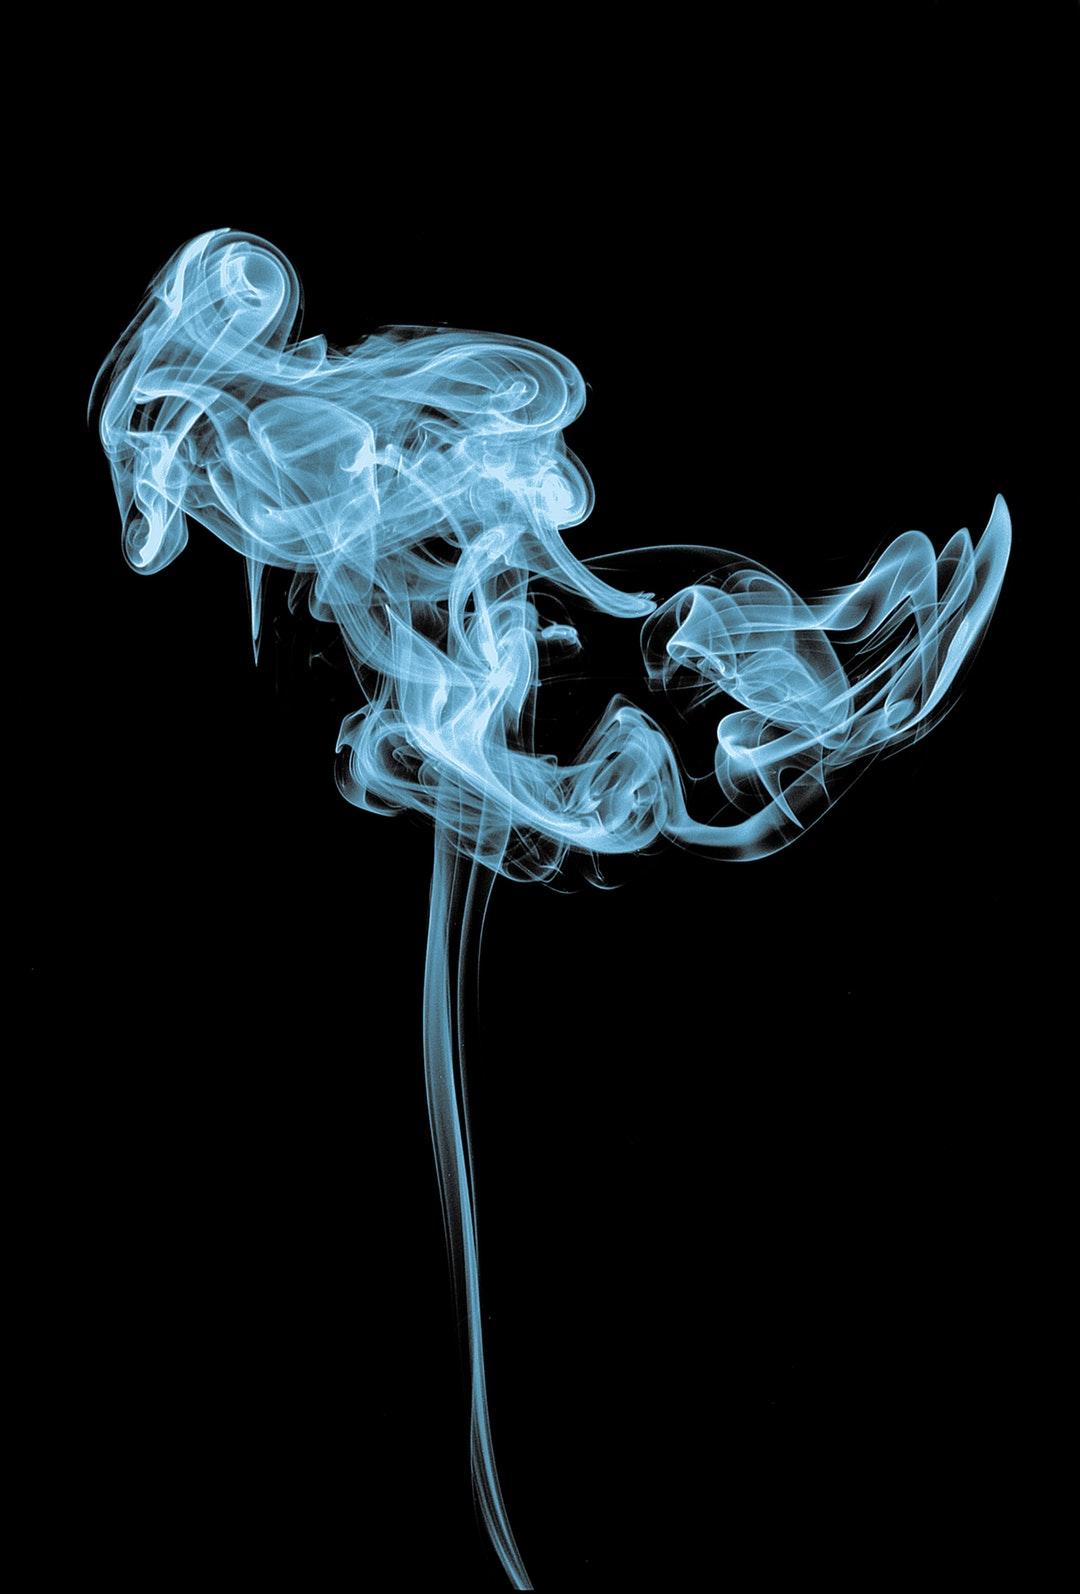 Smoke Image [HD]. Download Free Picture